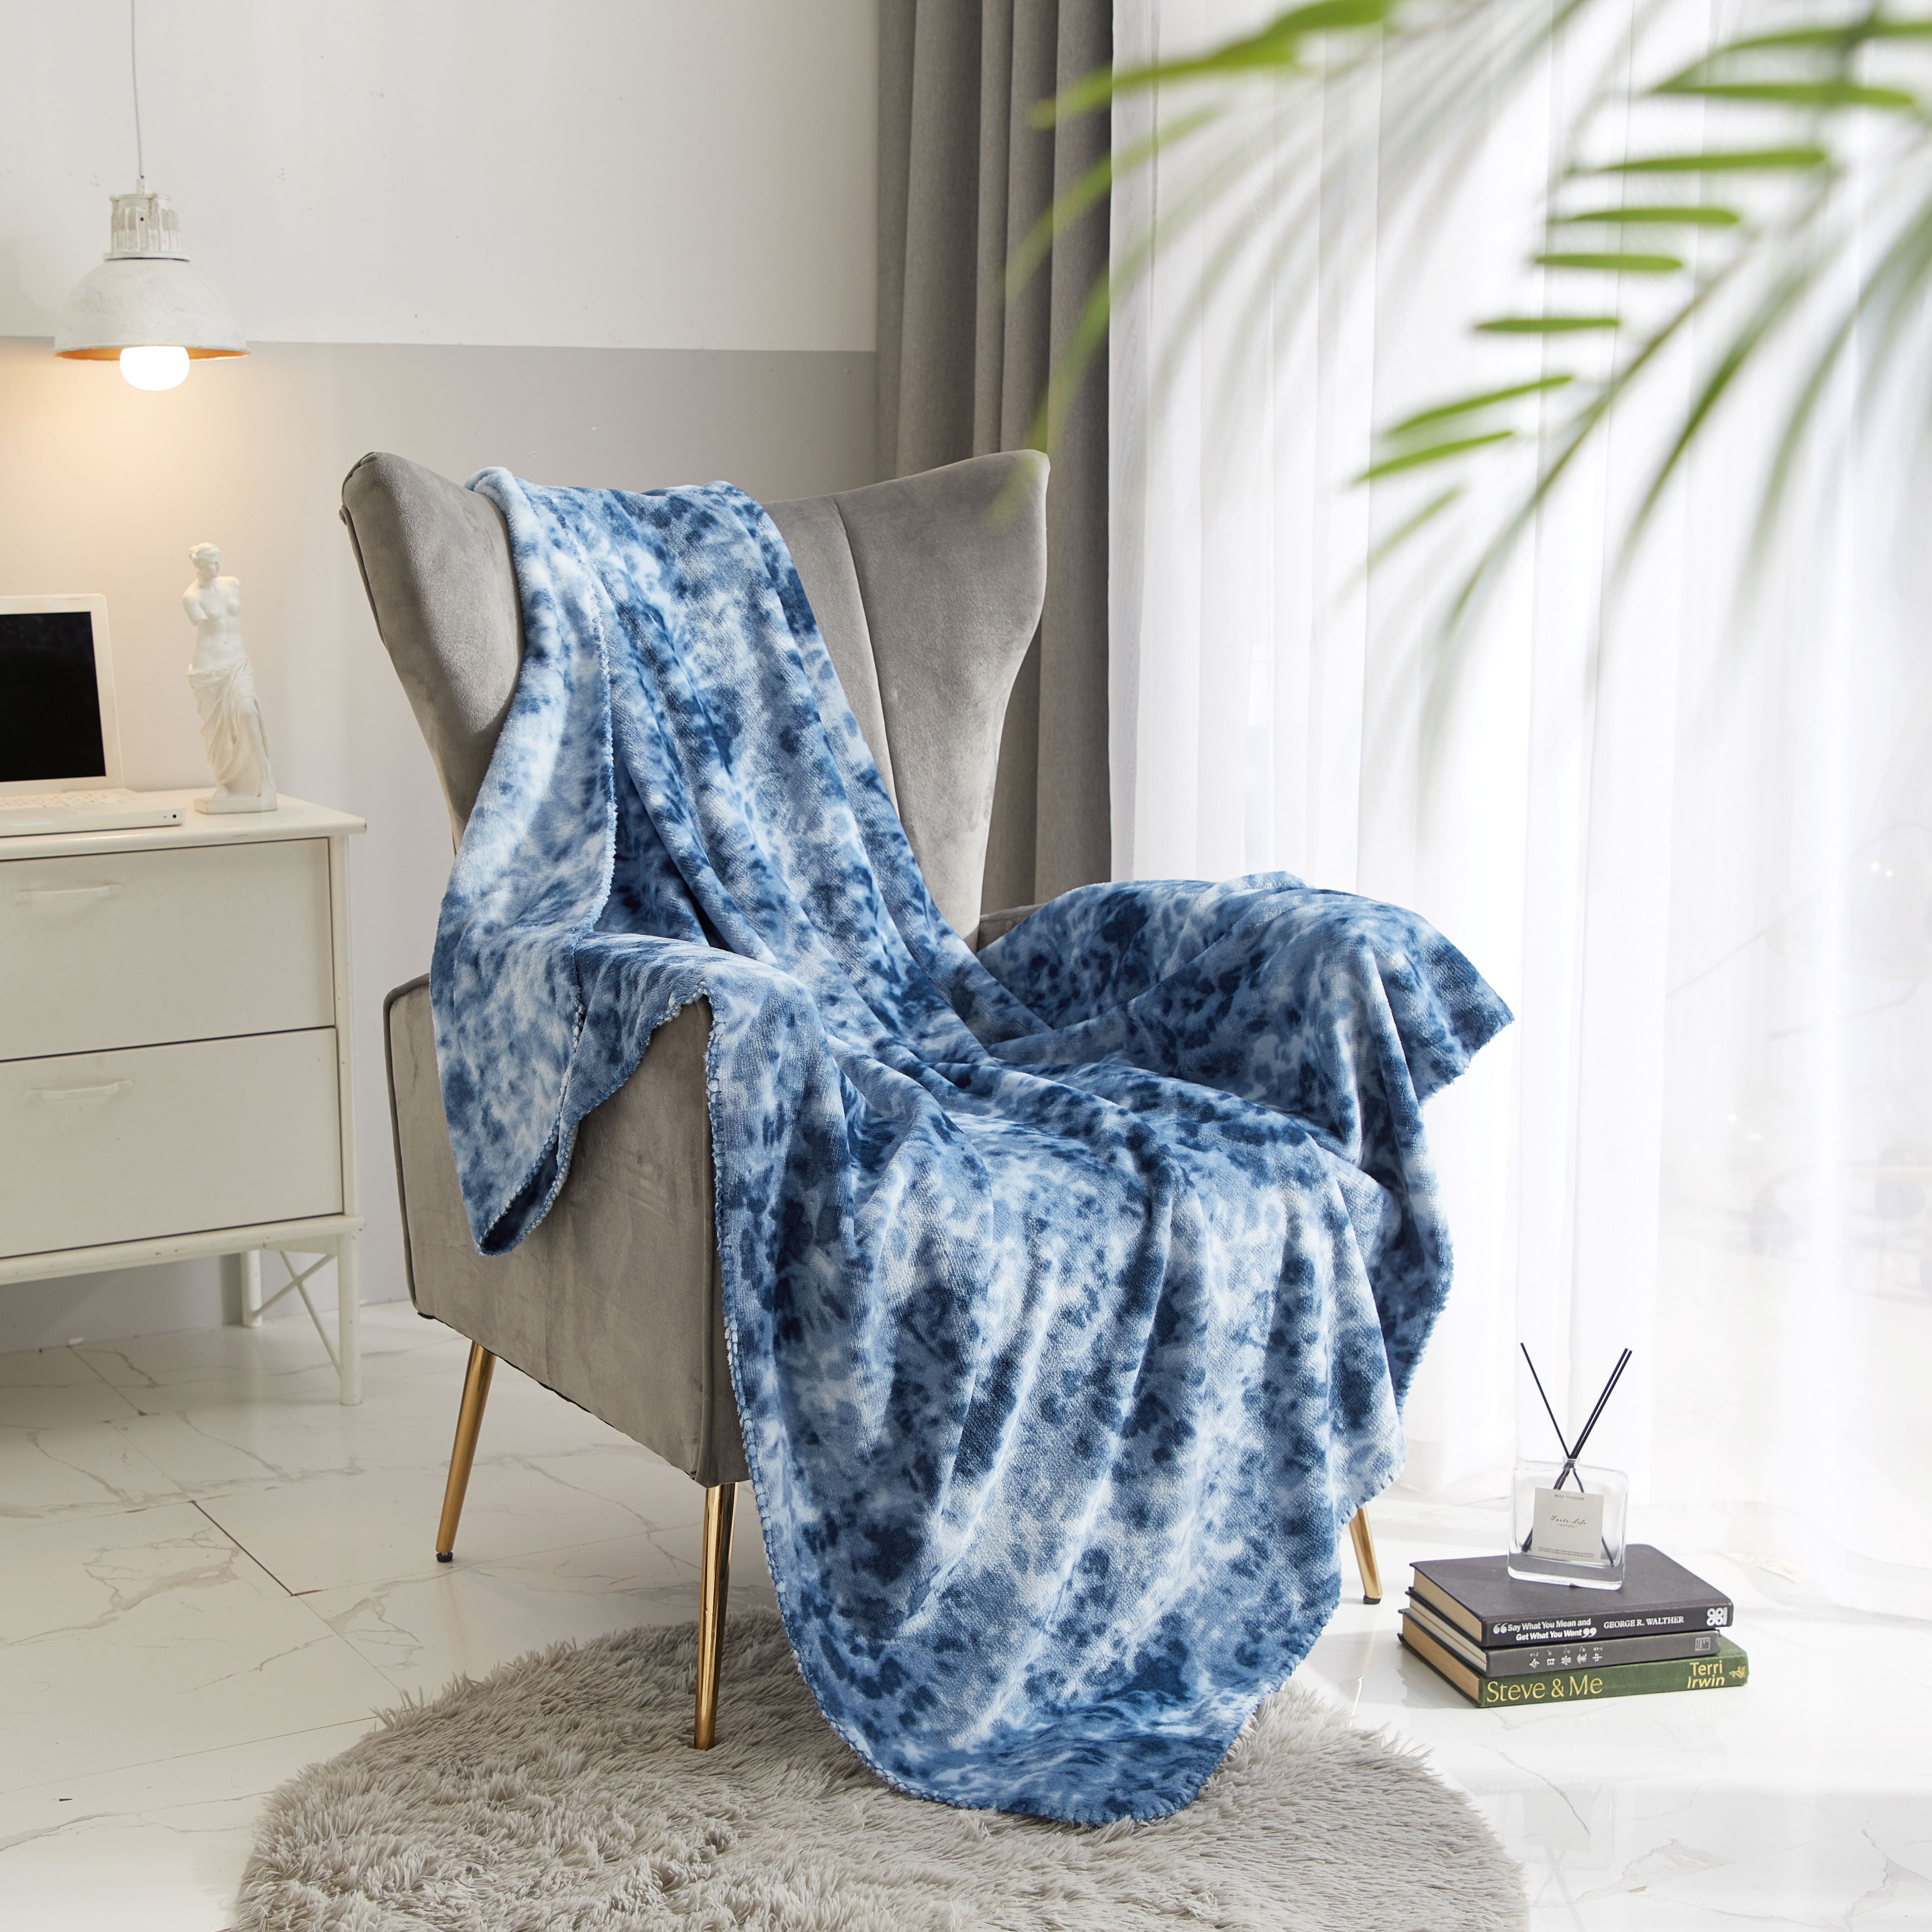 Mainstays Super Soft Plush Throw Blanket, 50 x 60, Blue Tie Dye